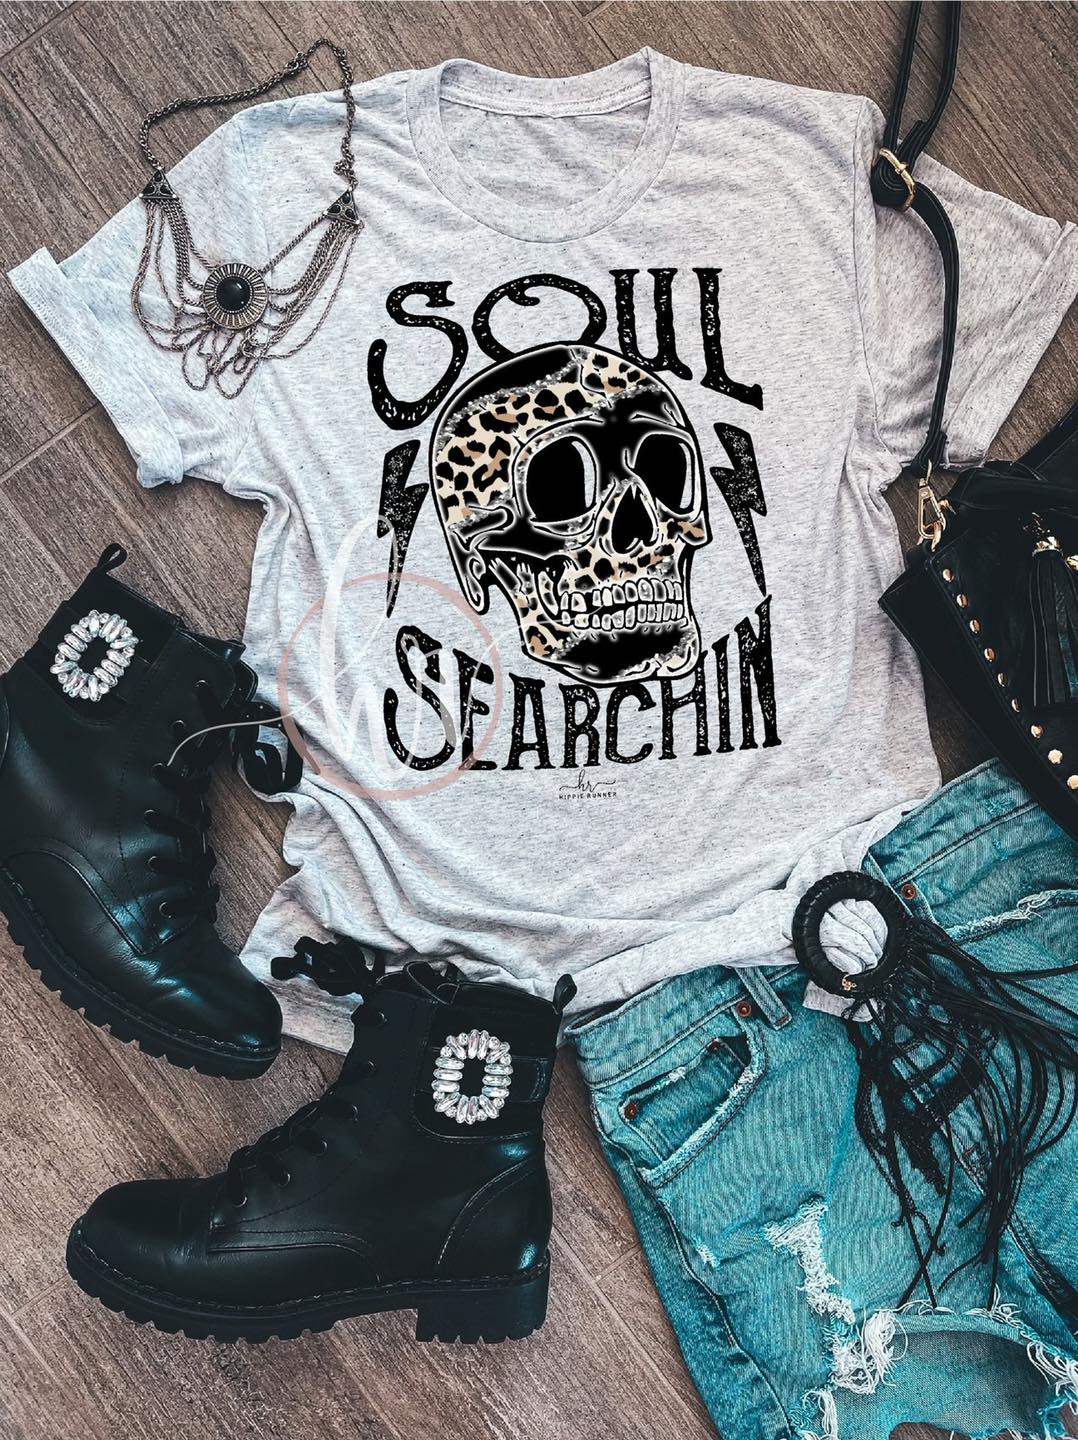 Soul searchin - Evil skullcap, evil finding soul